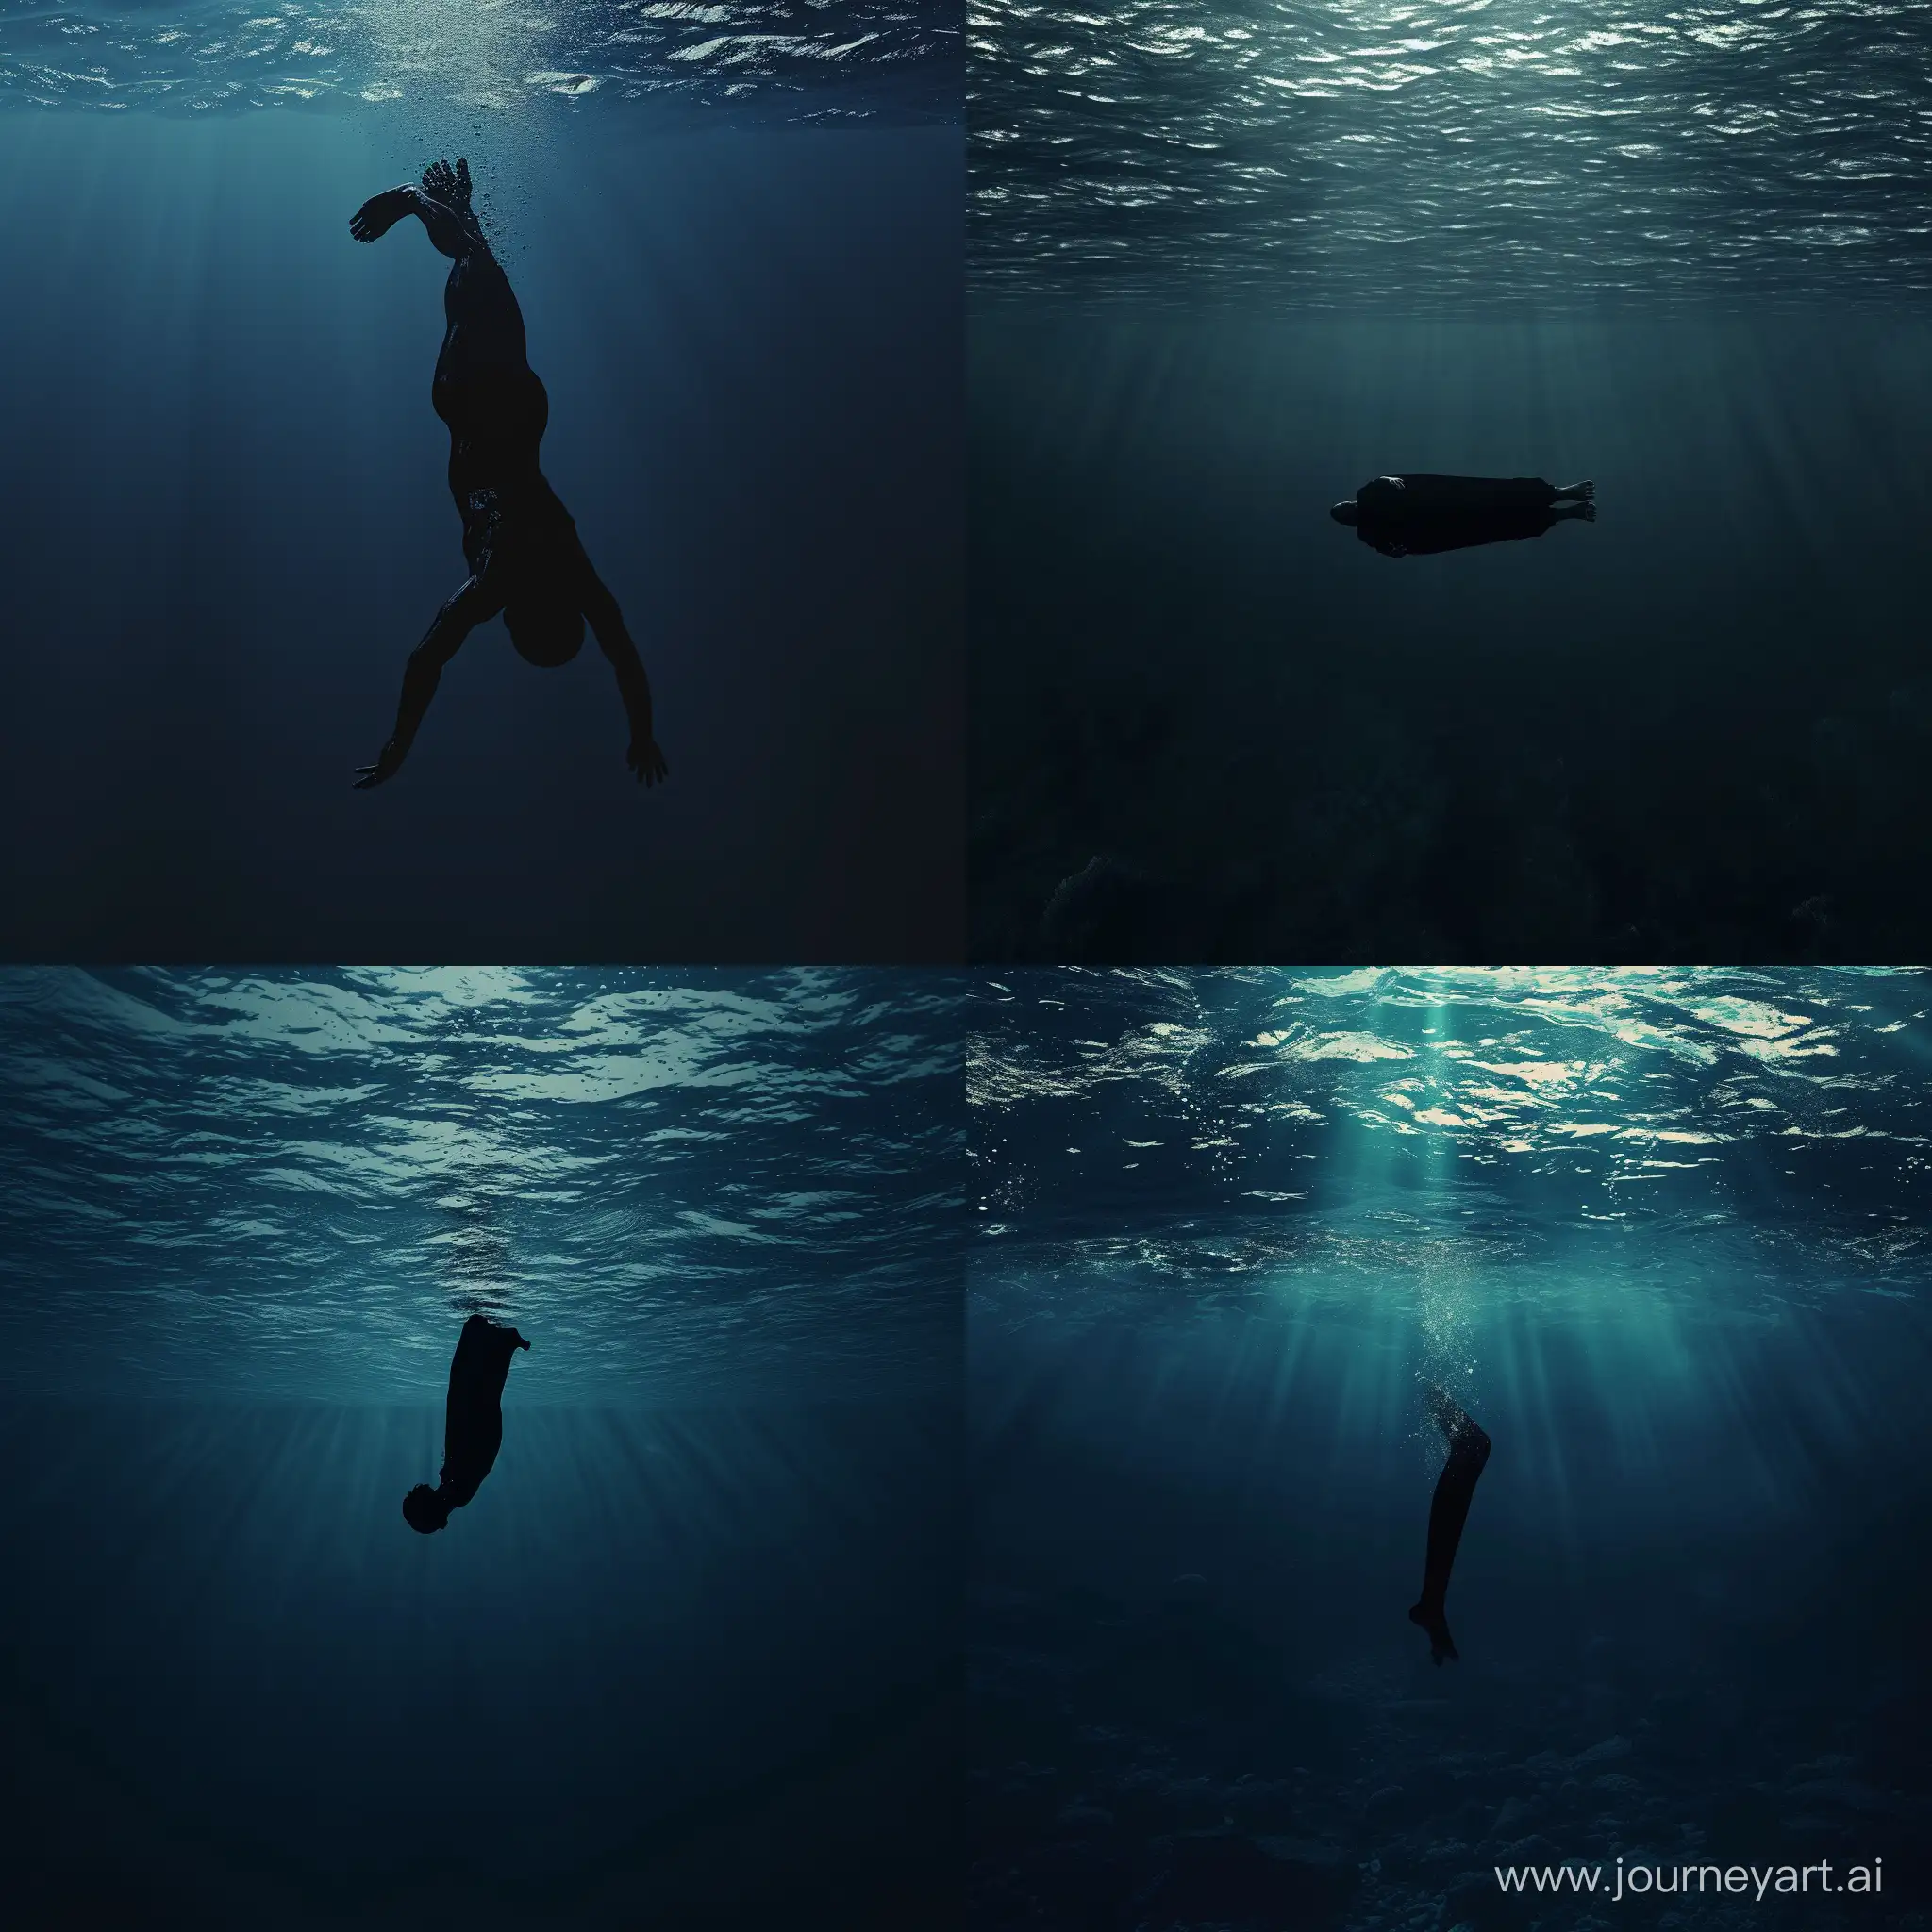 Dramatic-Realistic-4K-Underwater-Scene-Black-Body-Descending-into-the-Depths-of-the-Sea